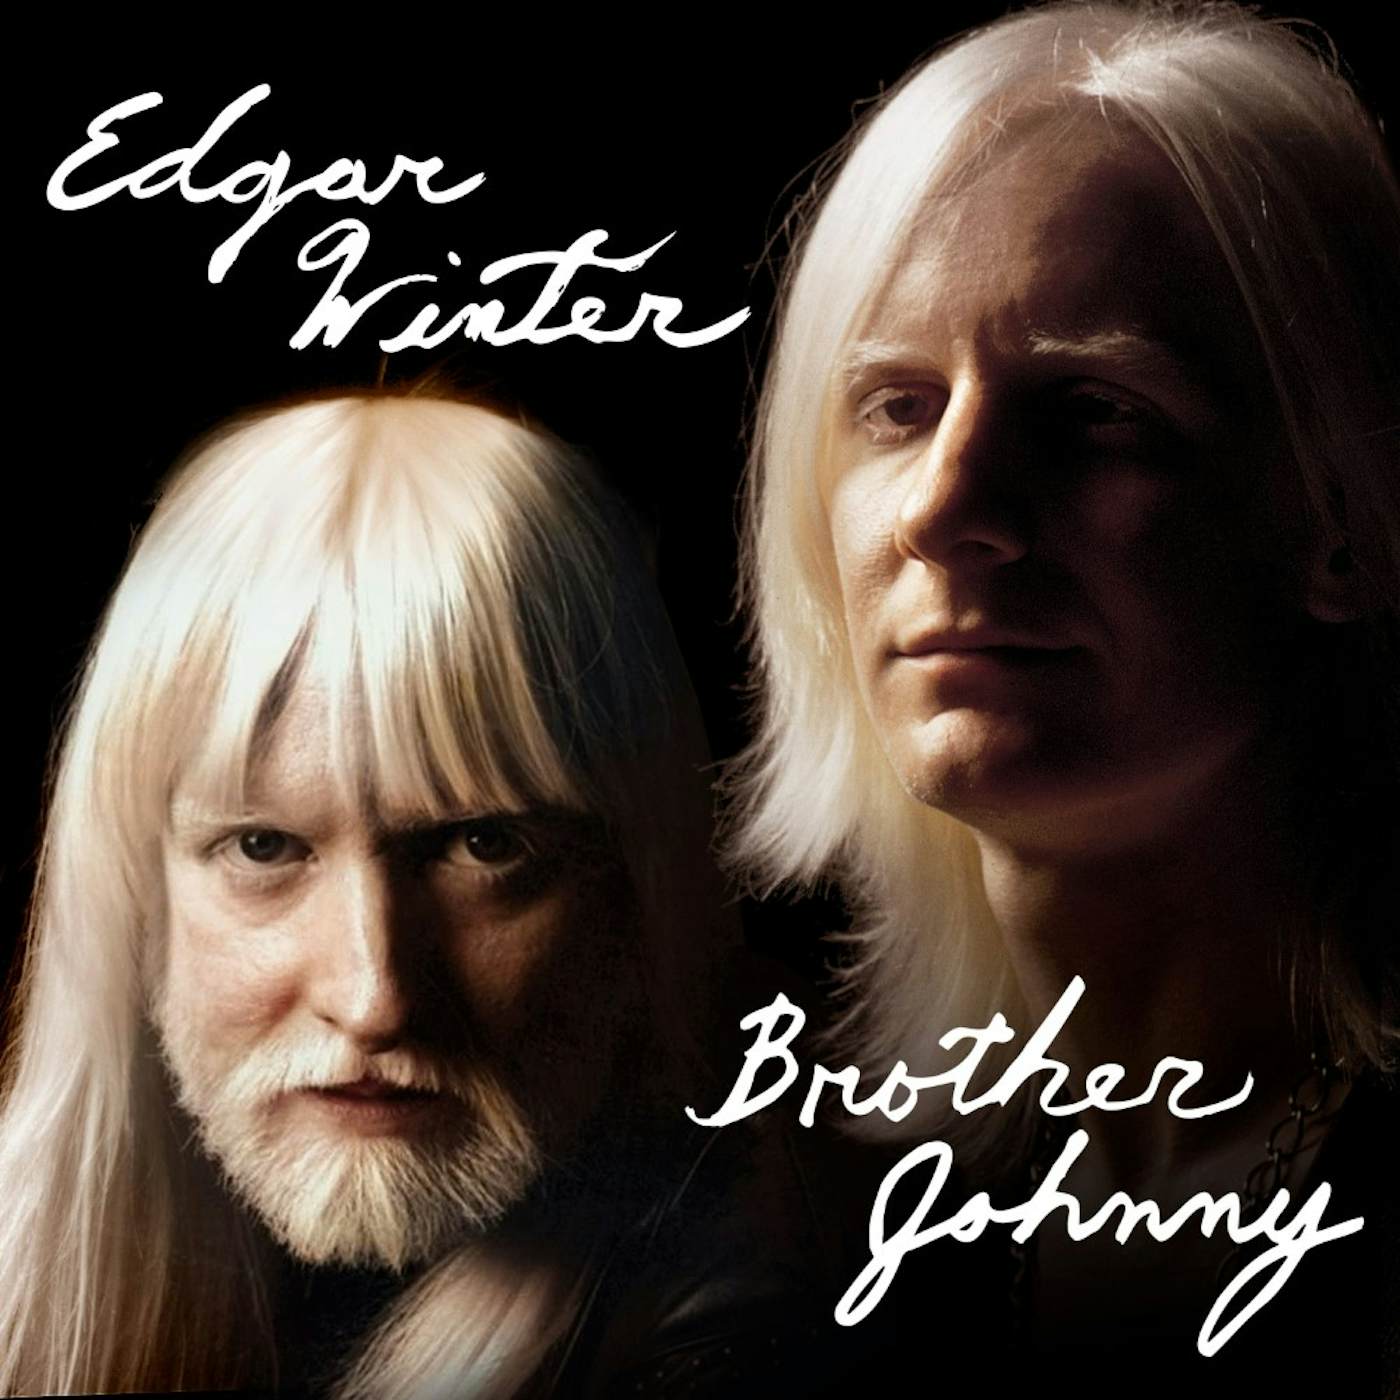 Edgar Winter BROTHER JOHNNY CD